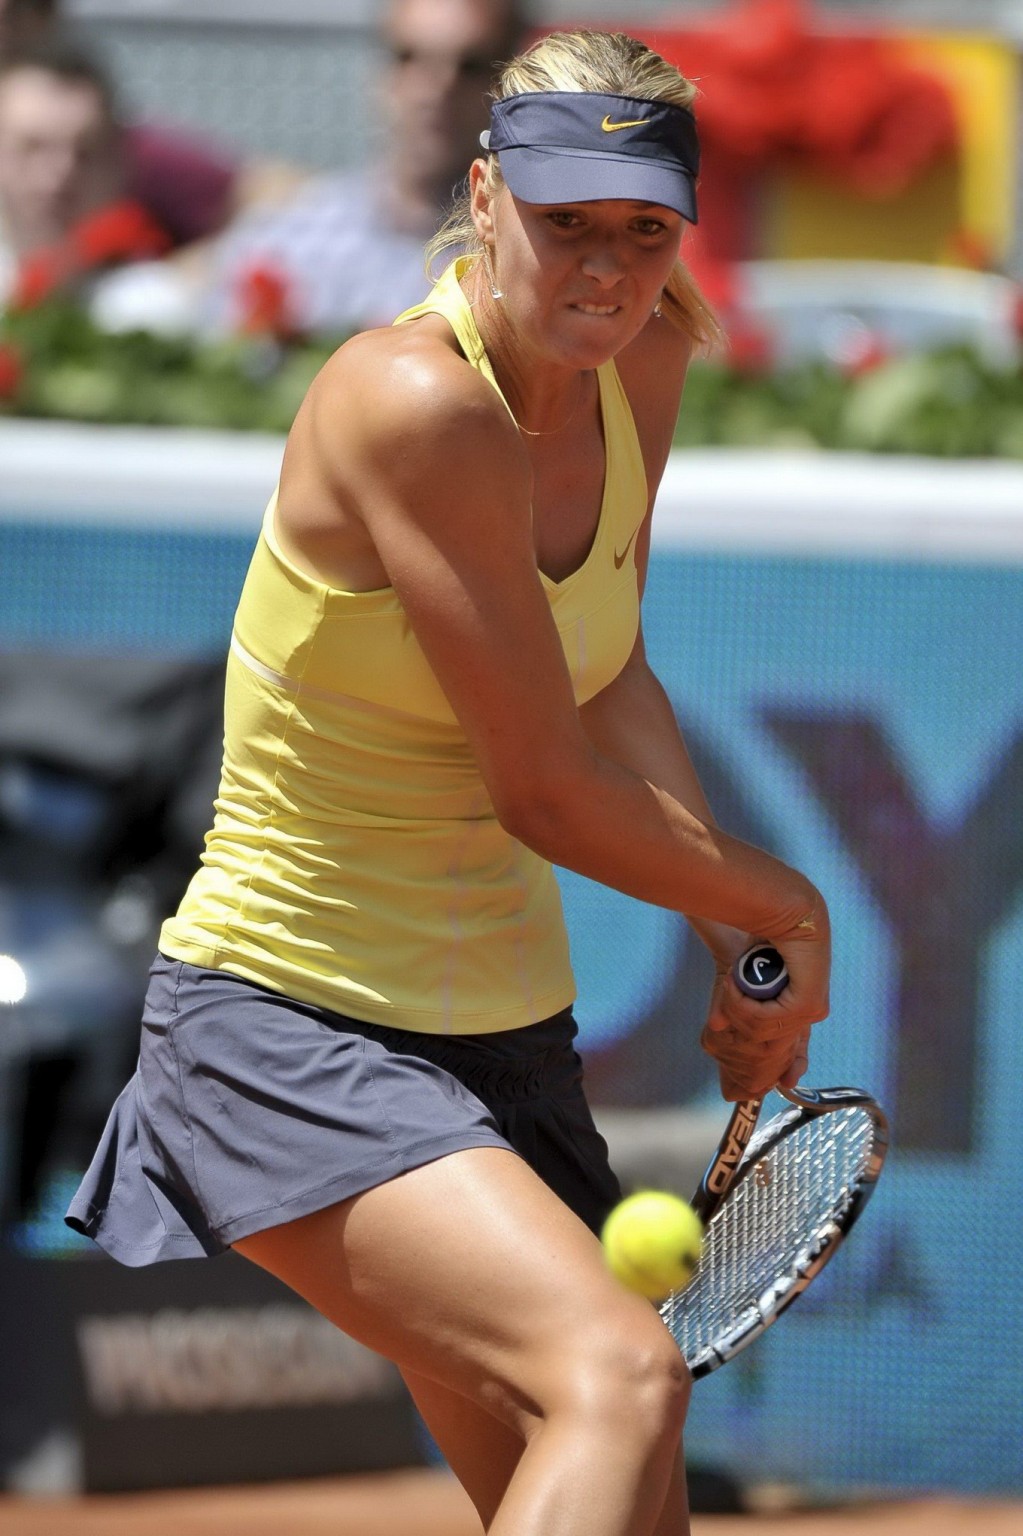 Maria Sharapova en jupe haute au tournoi des 'masters' de Madrid
 #75305219